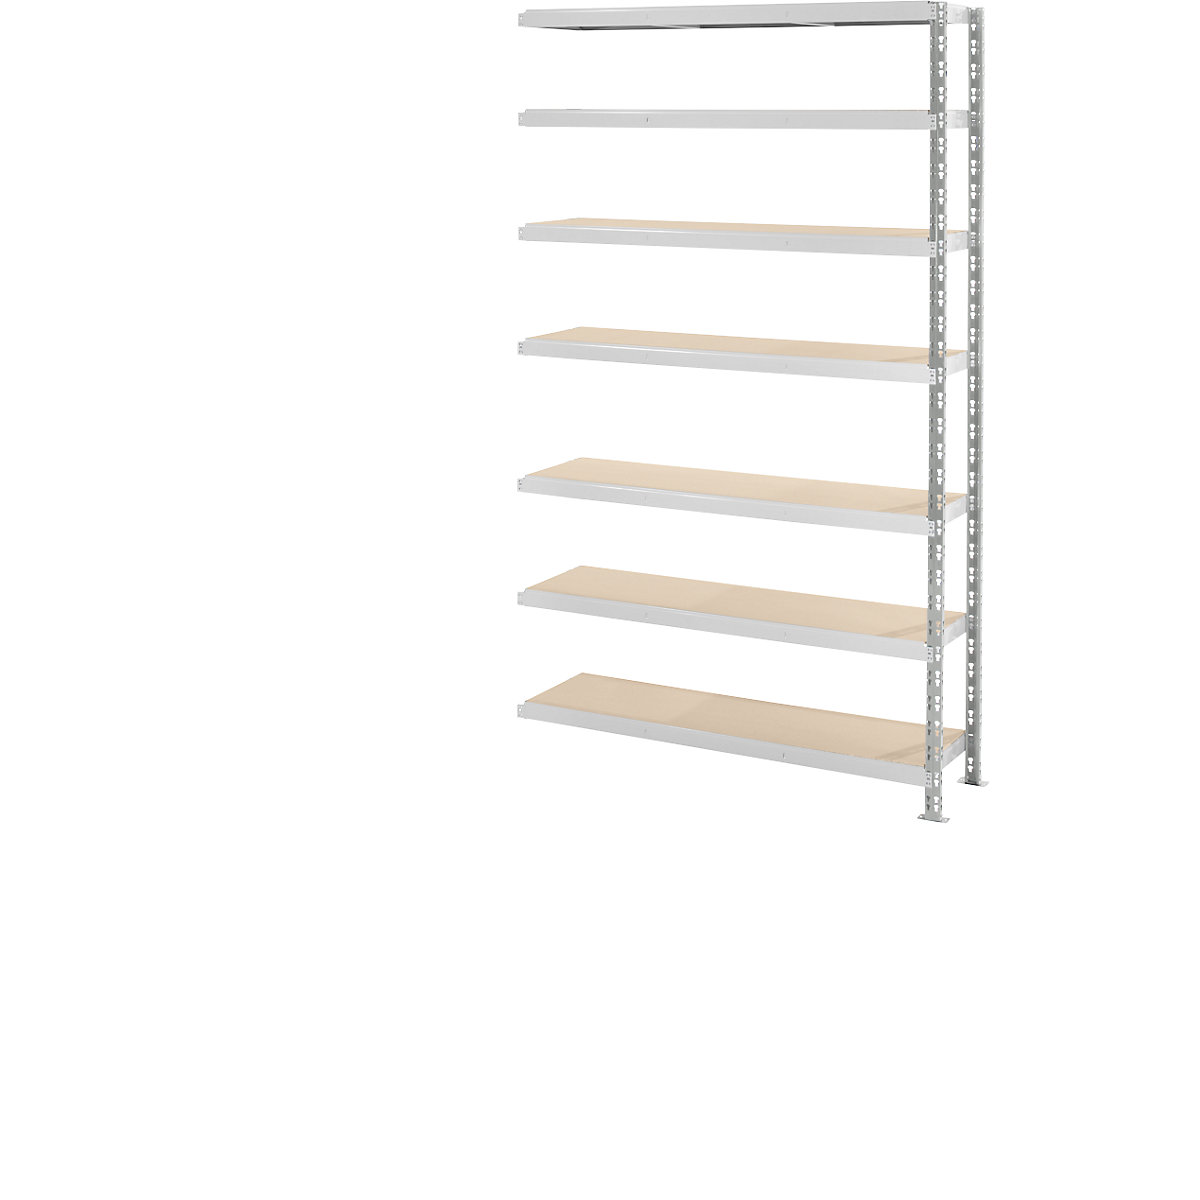 Wide span boltless shelf unit with moulded chipboard shelves, depth 500 mm, extension shelf unit, HxW 2522 x 1525 mm